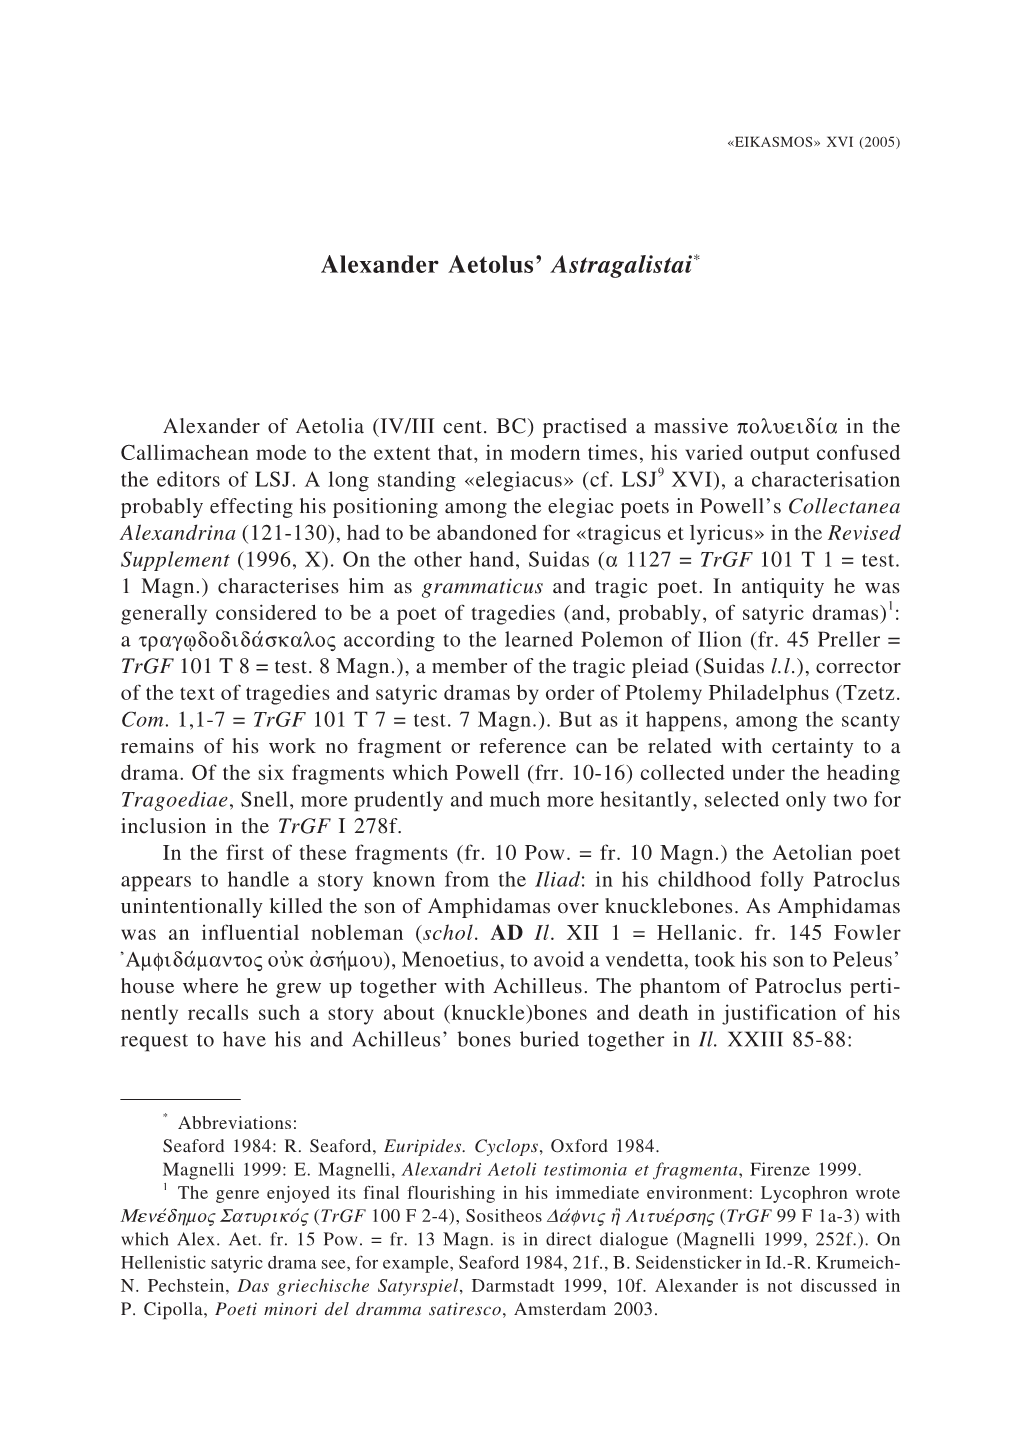 Alexander Aetolus' Astragalistai*